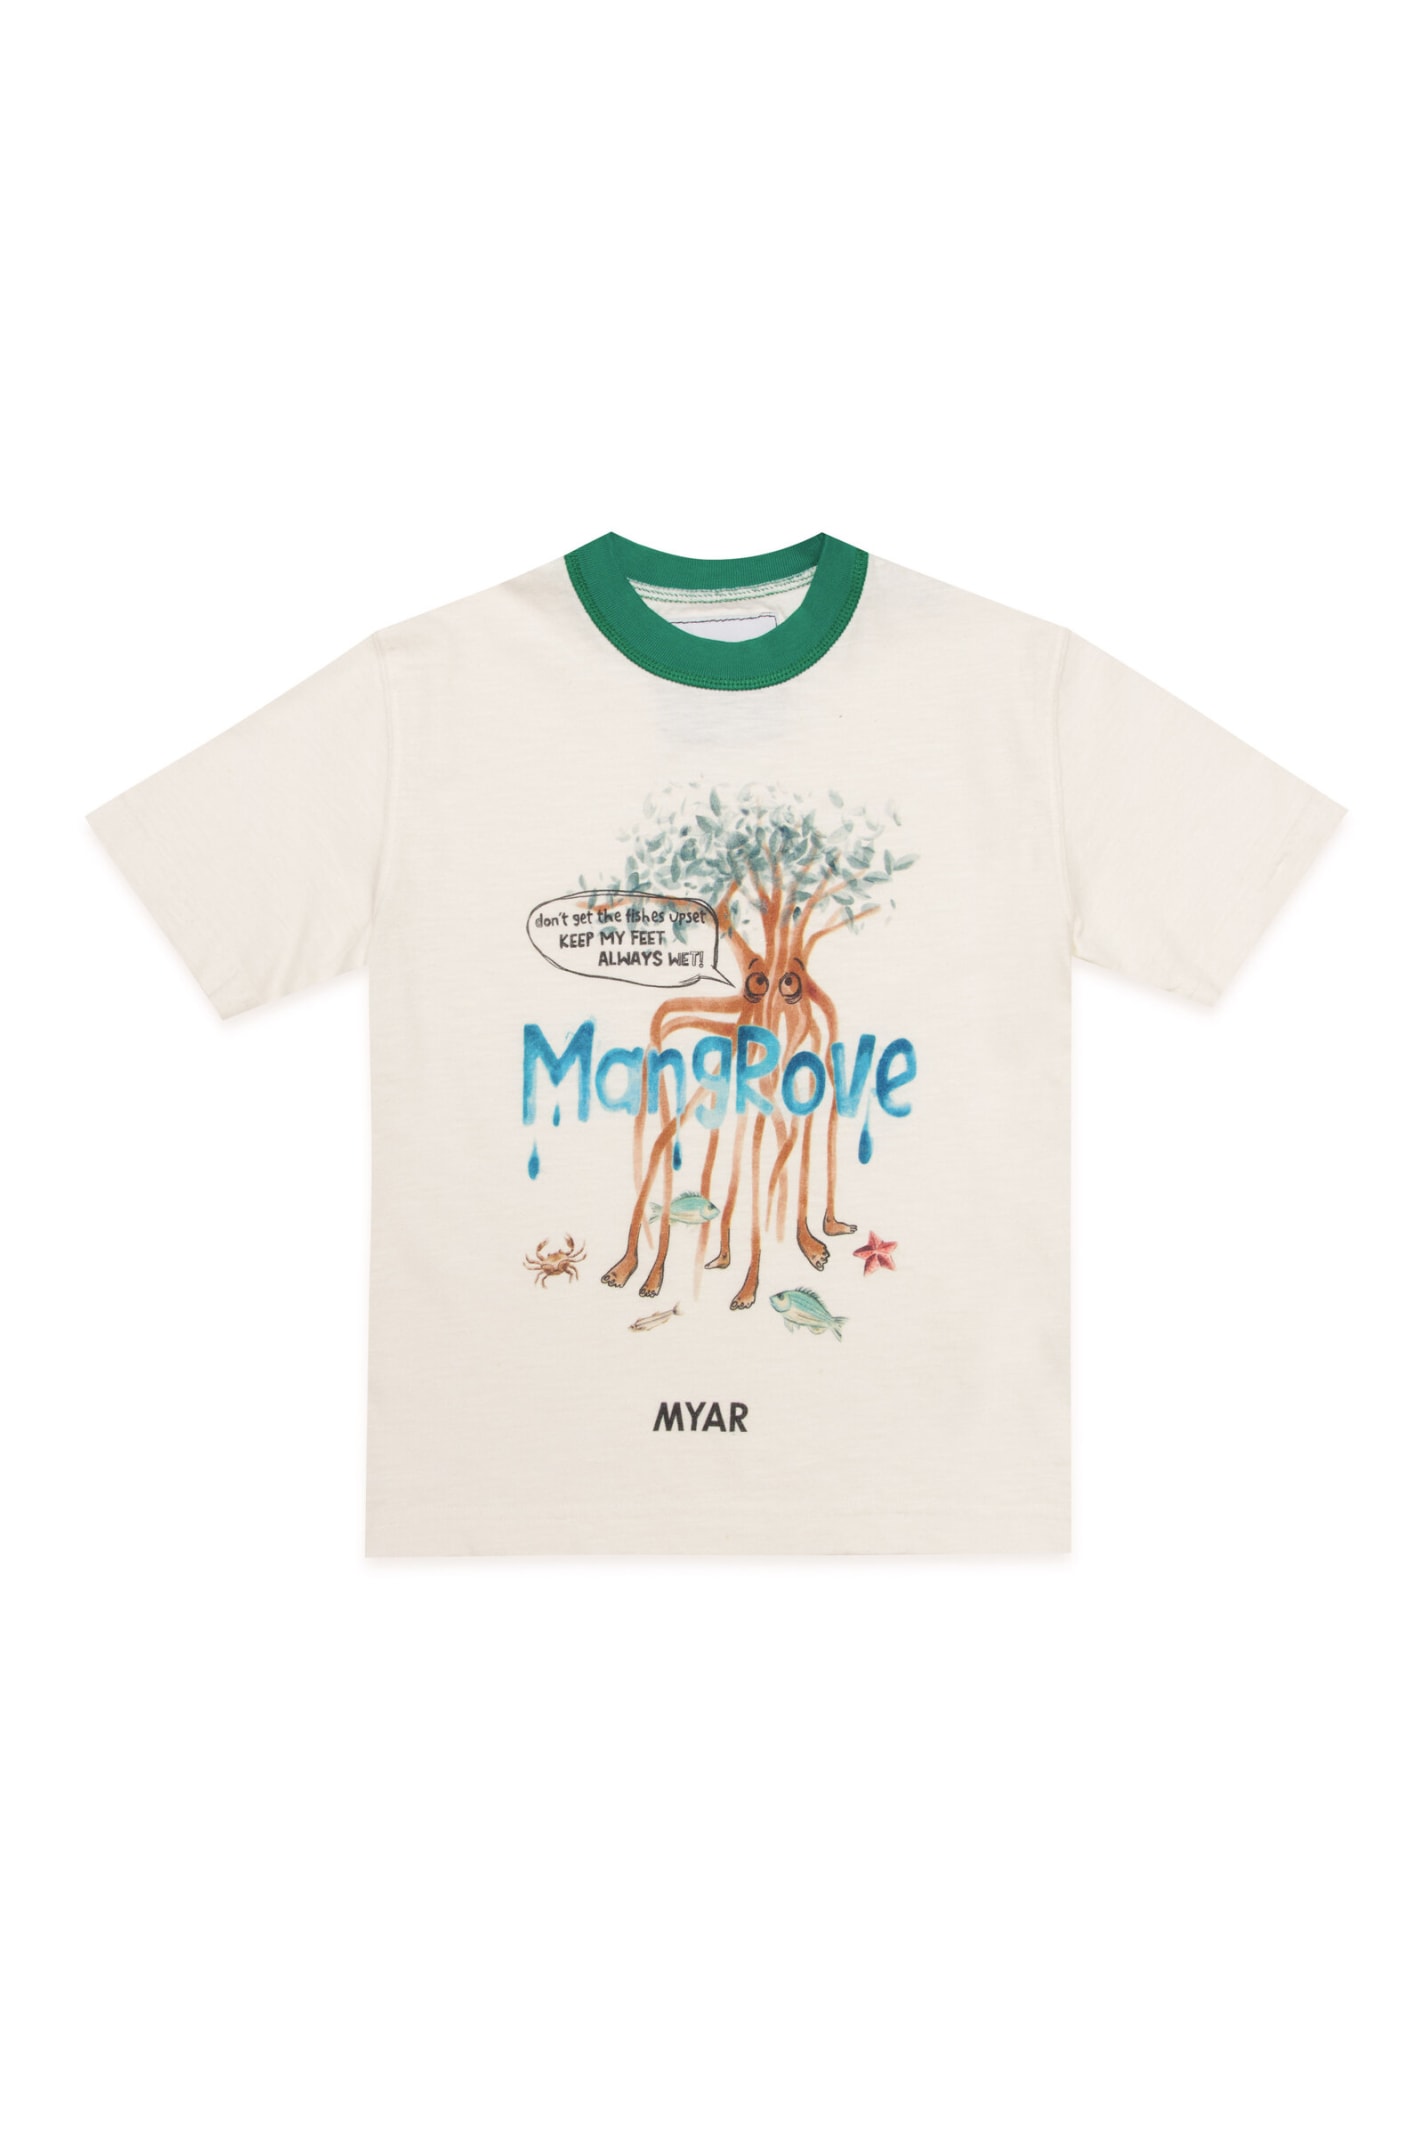 MYAR Myt23u T-shirt Myar Deadstock White Fabric Crew-neck T-shirt With Digital Mangrove Print